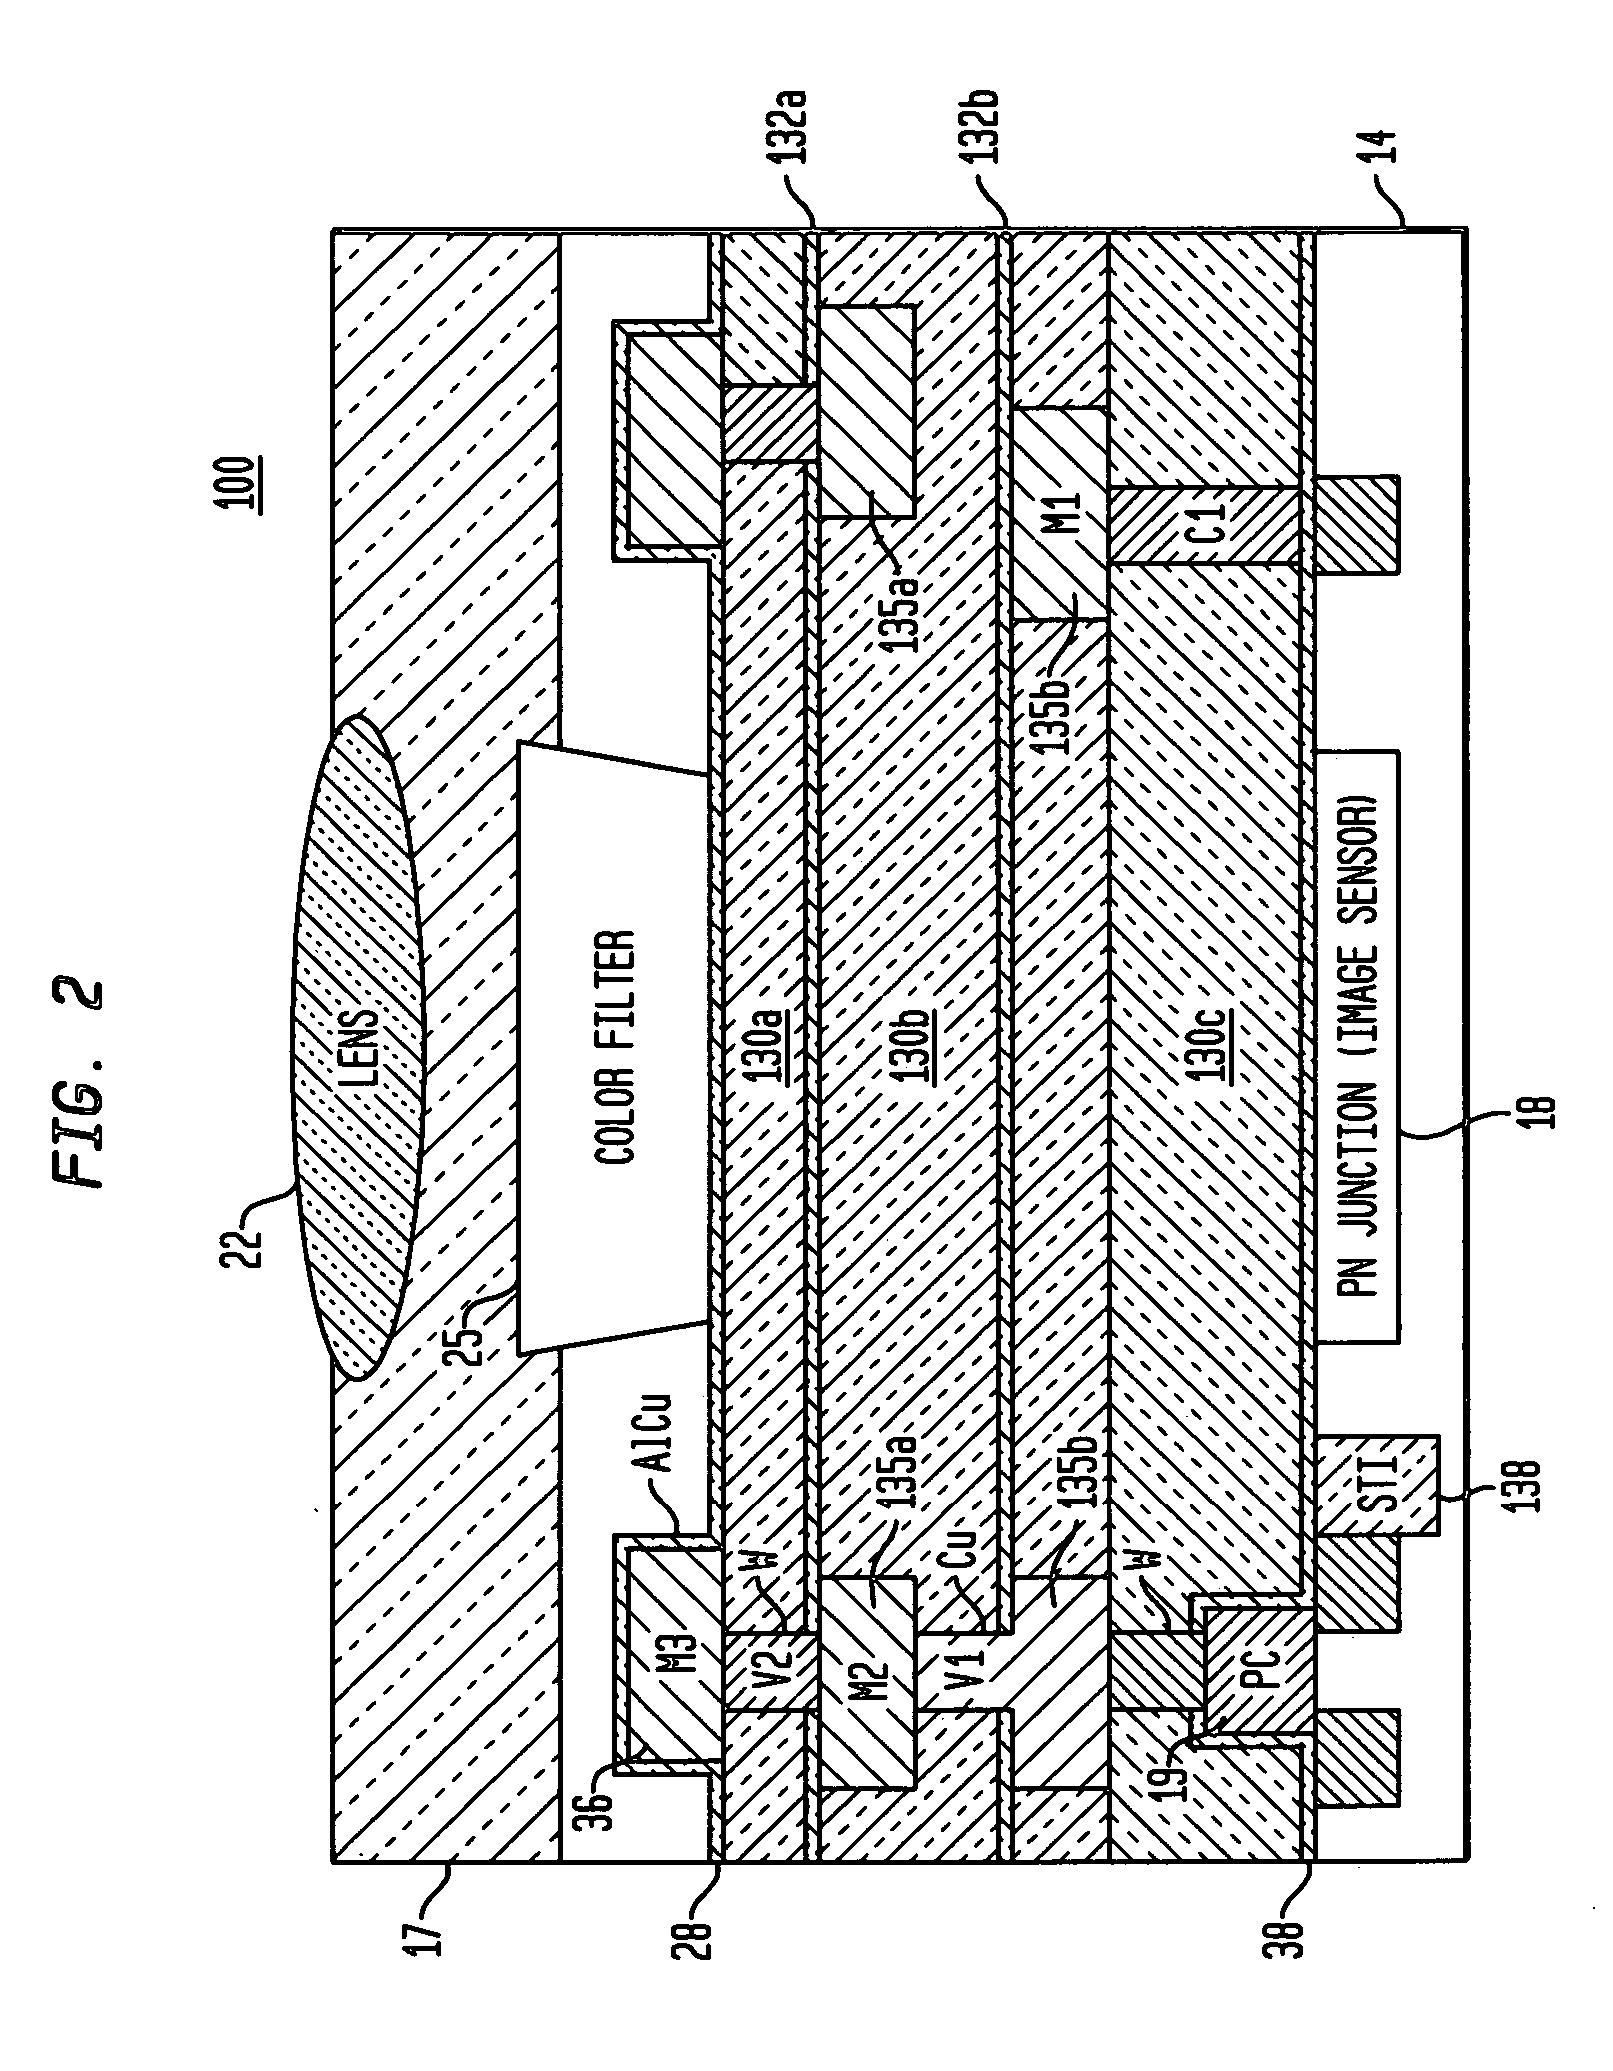 A damascene copper wiring image sensor